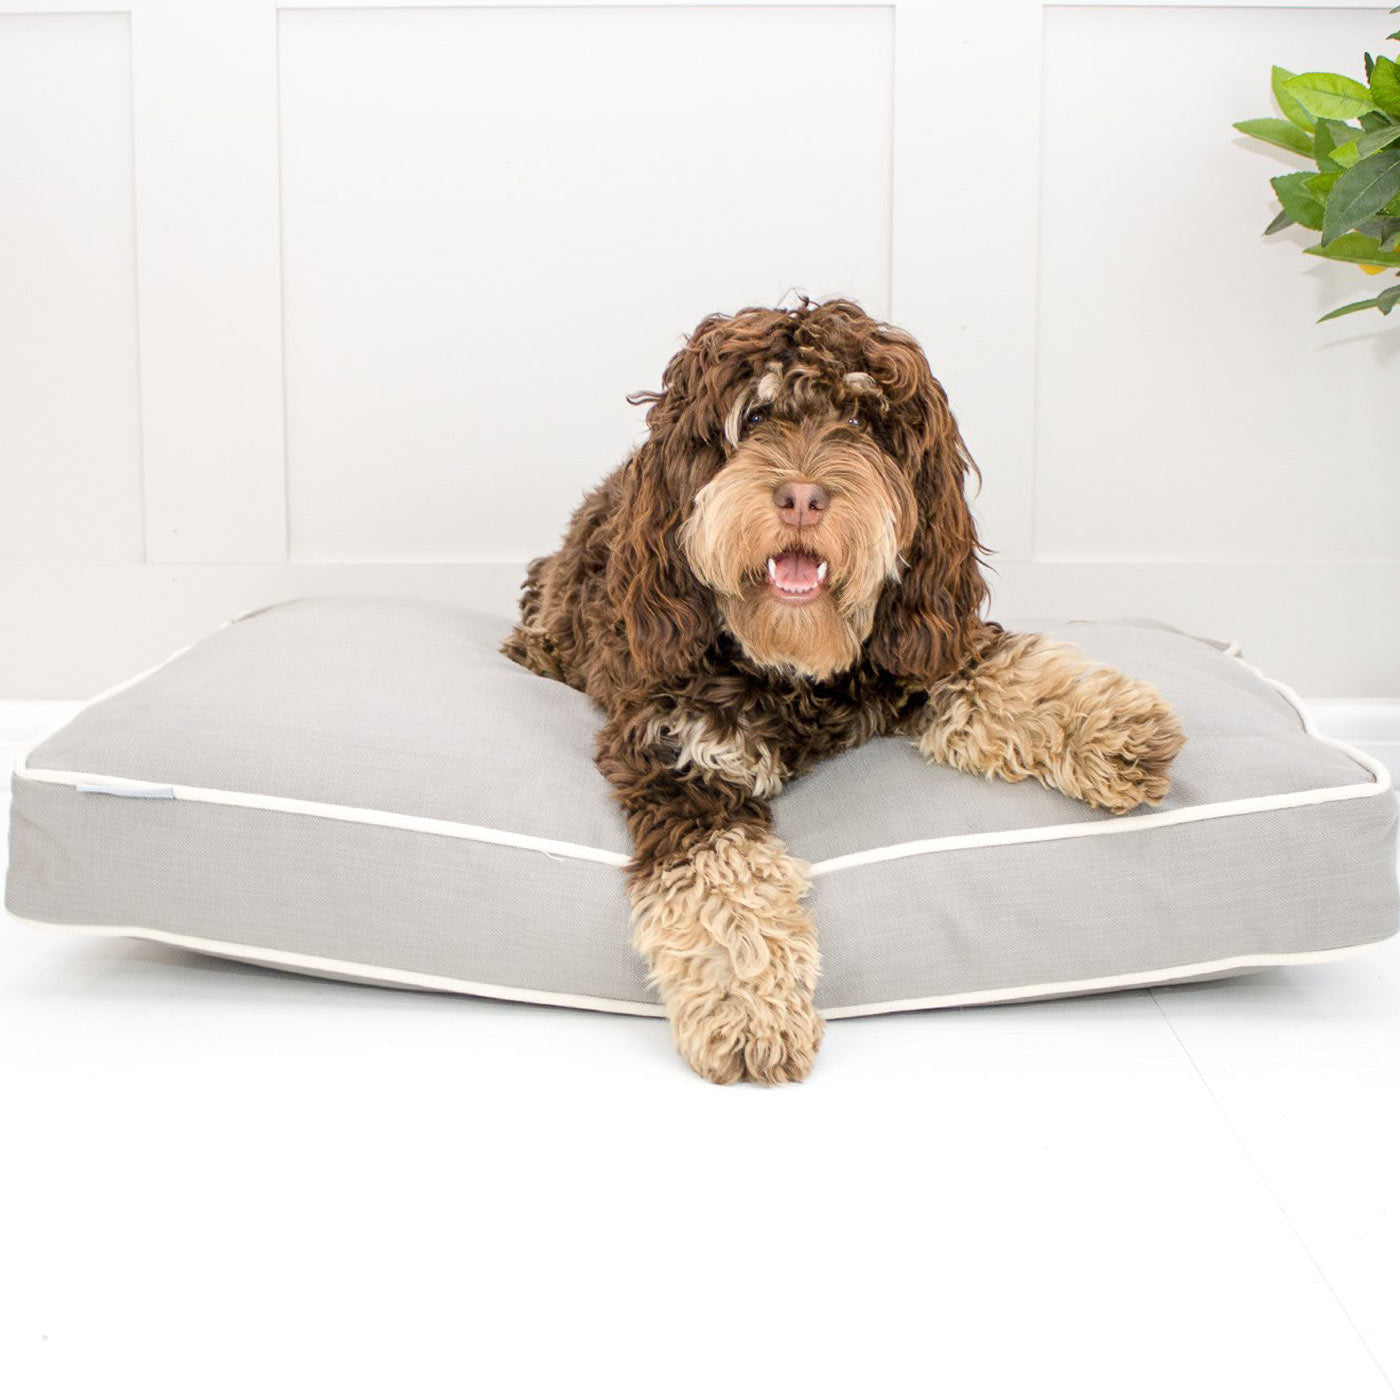 Dog Cushion in Savanna Stone by Lords & Labradors